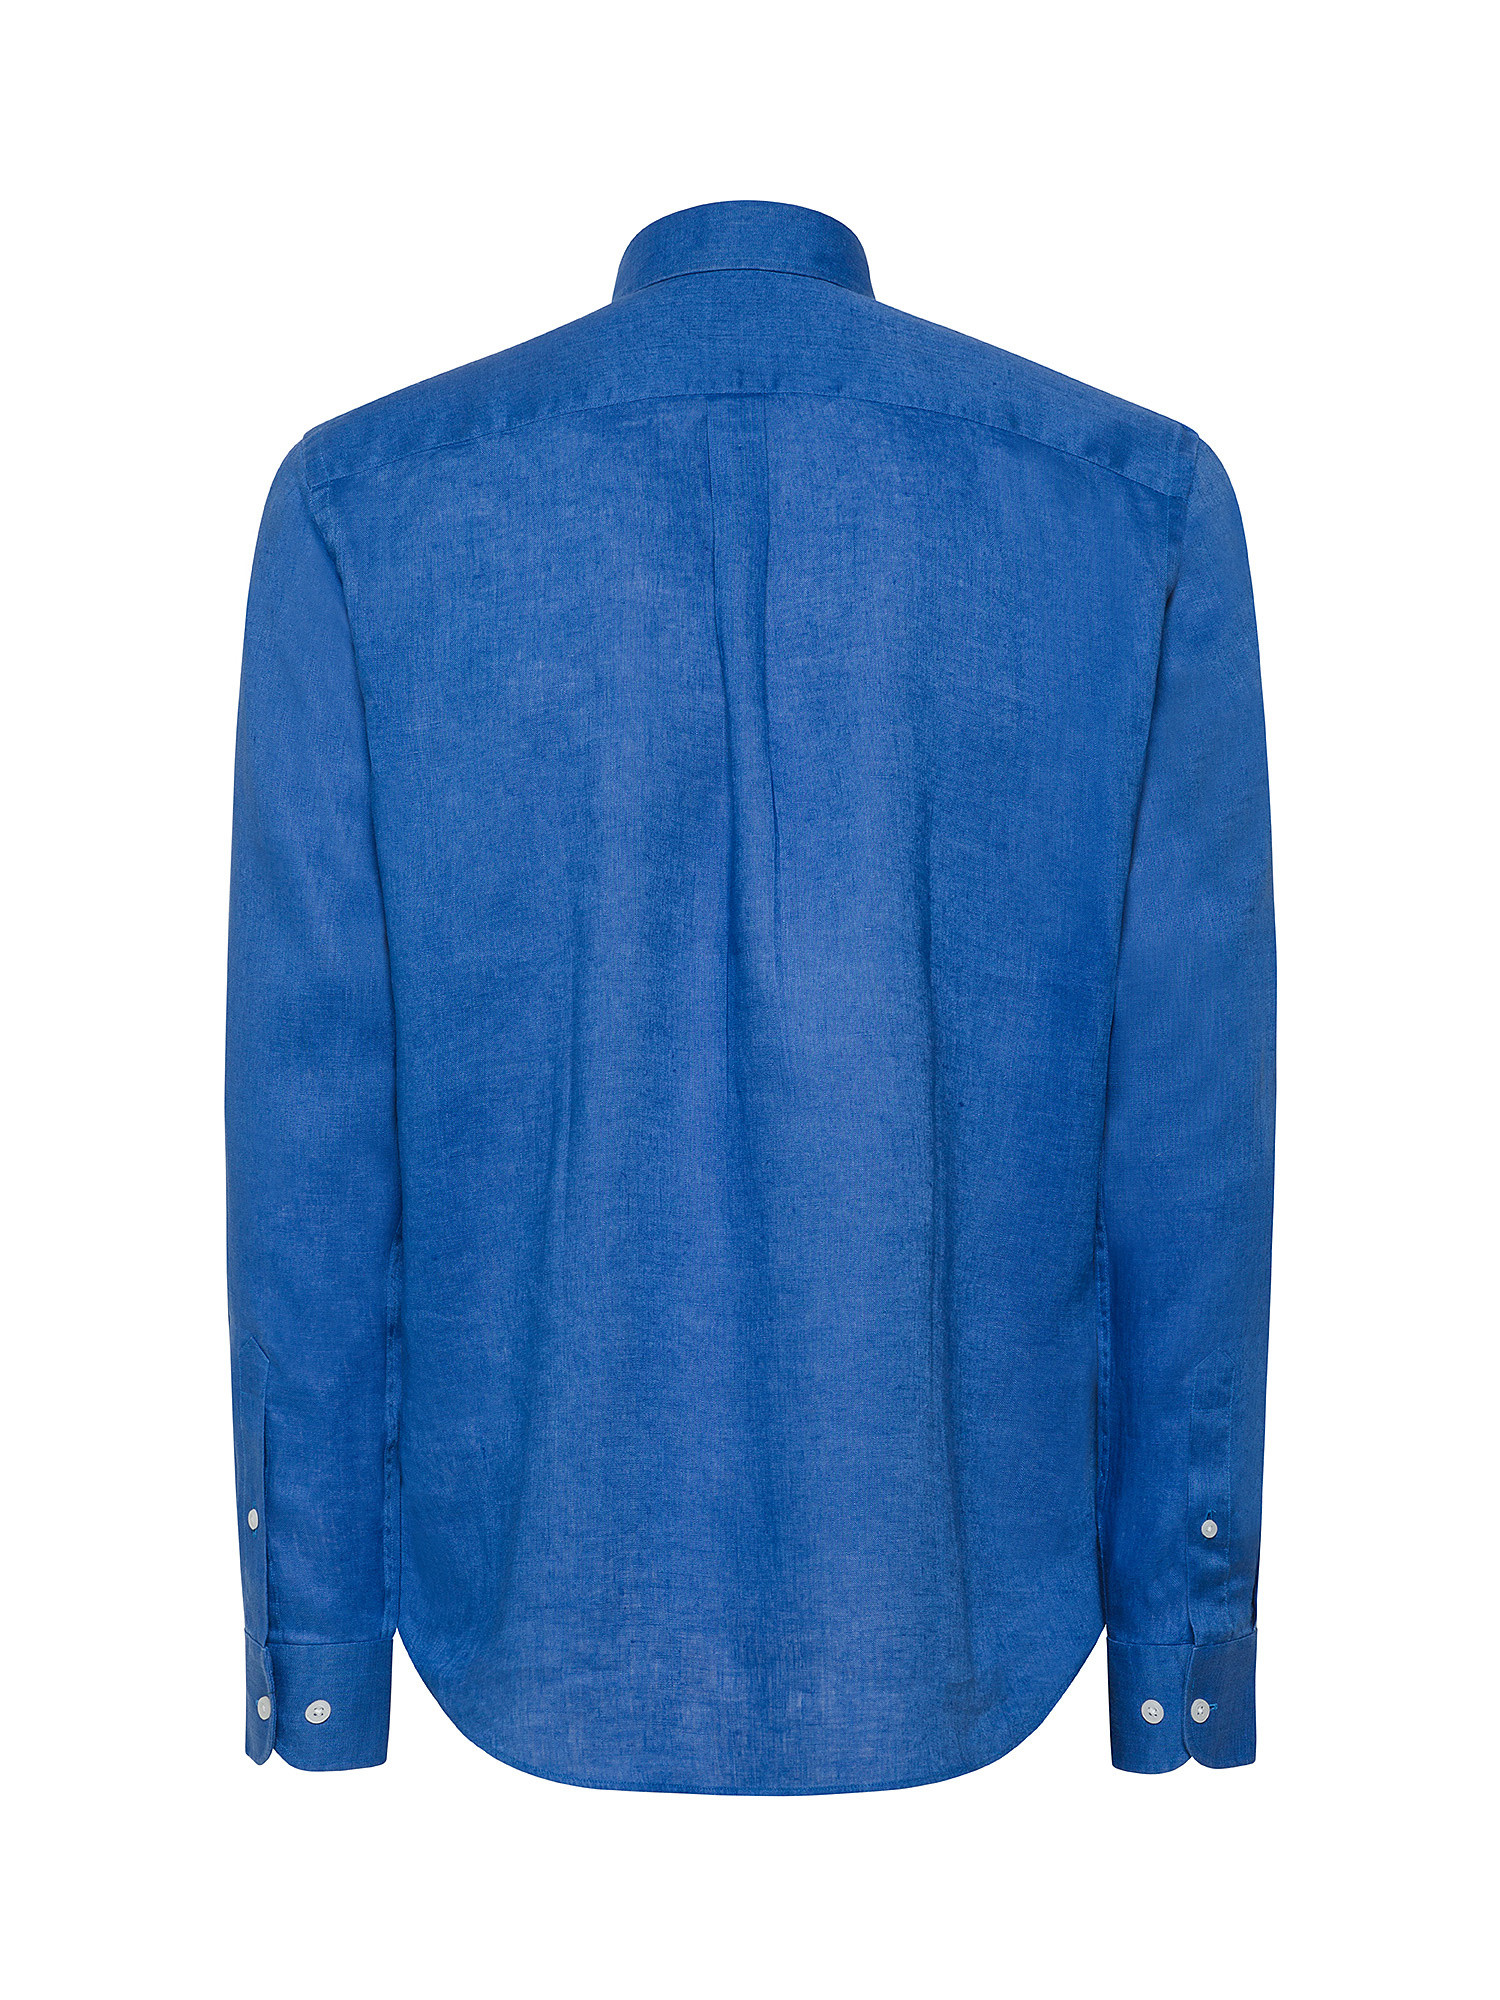 Luca D'Altieri - Tailor fit shirt in pure linen, Blue Cornflower, large image number 1